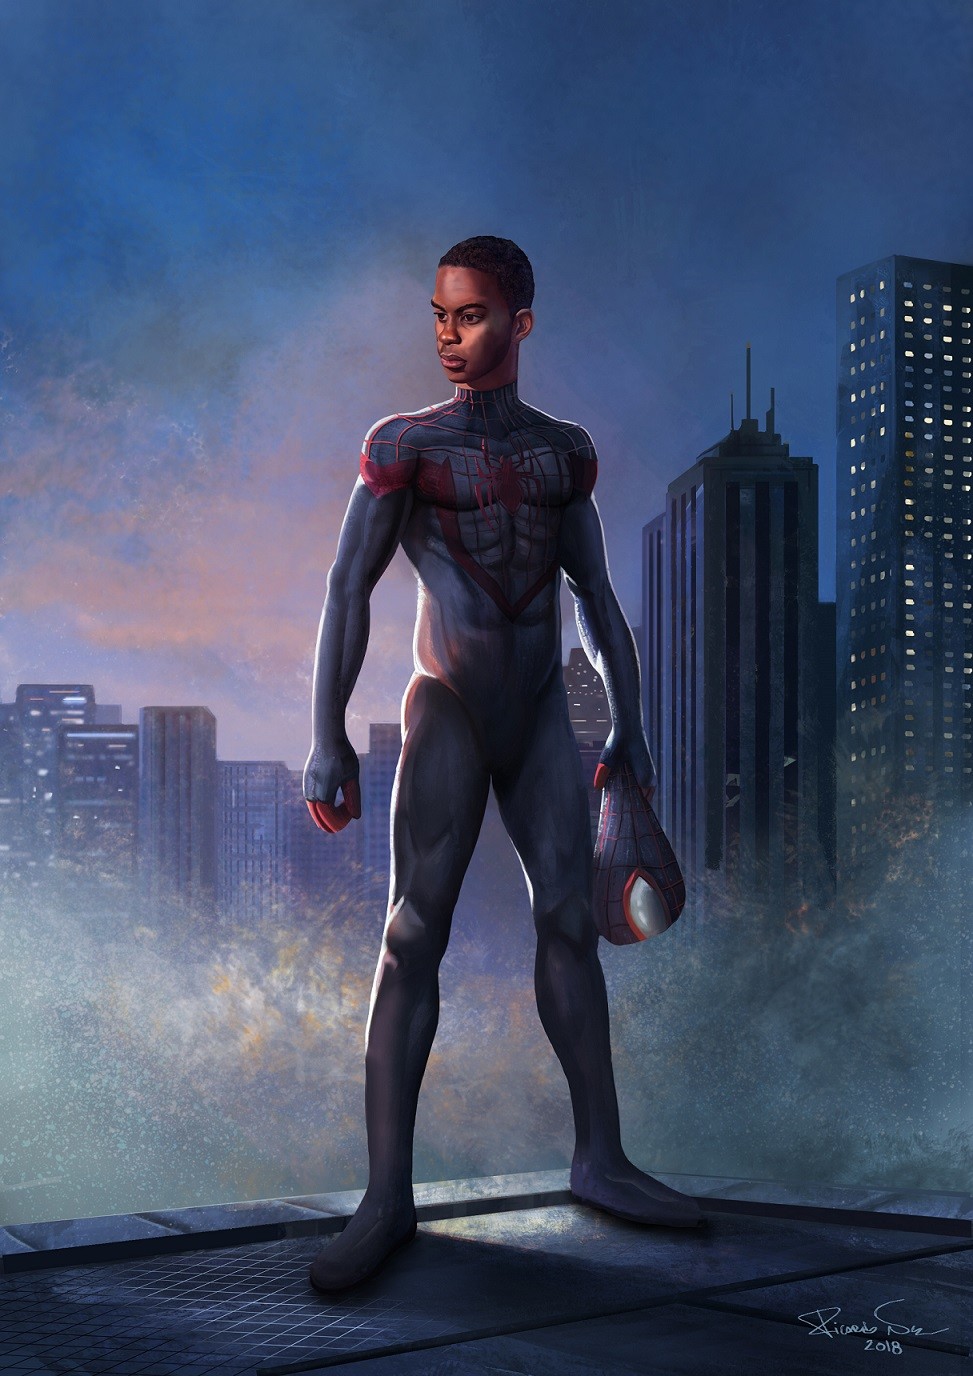 Ricardo - Miles Morales the new spiderman.